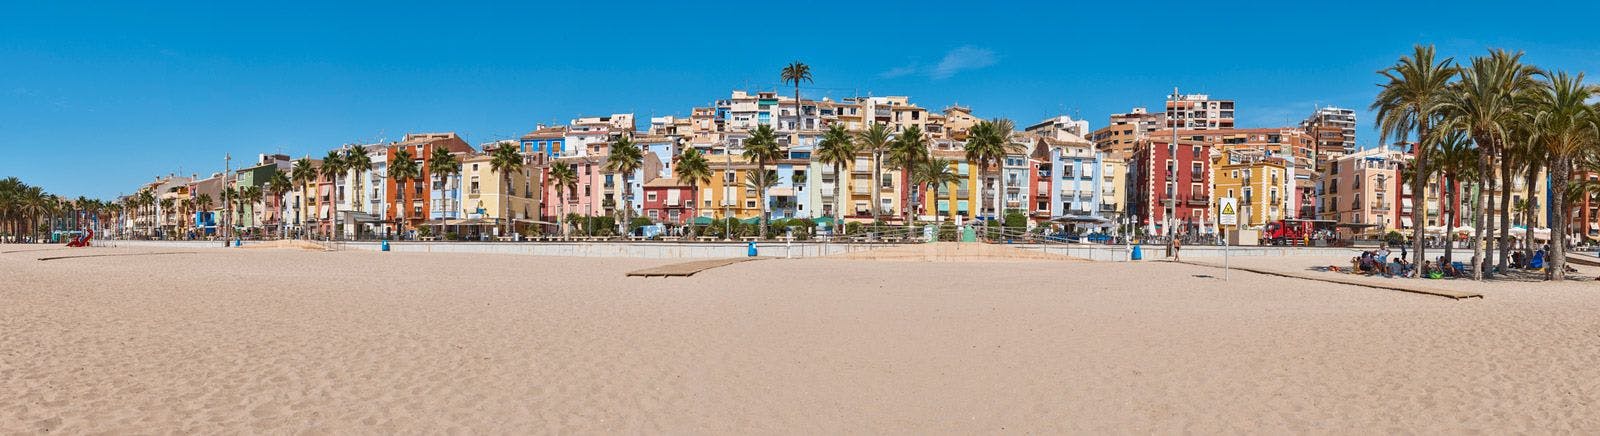 Vilajoyosa colorful town on golden sand beach